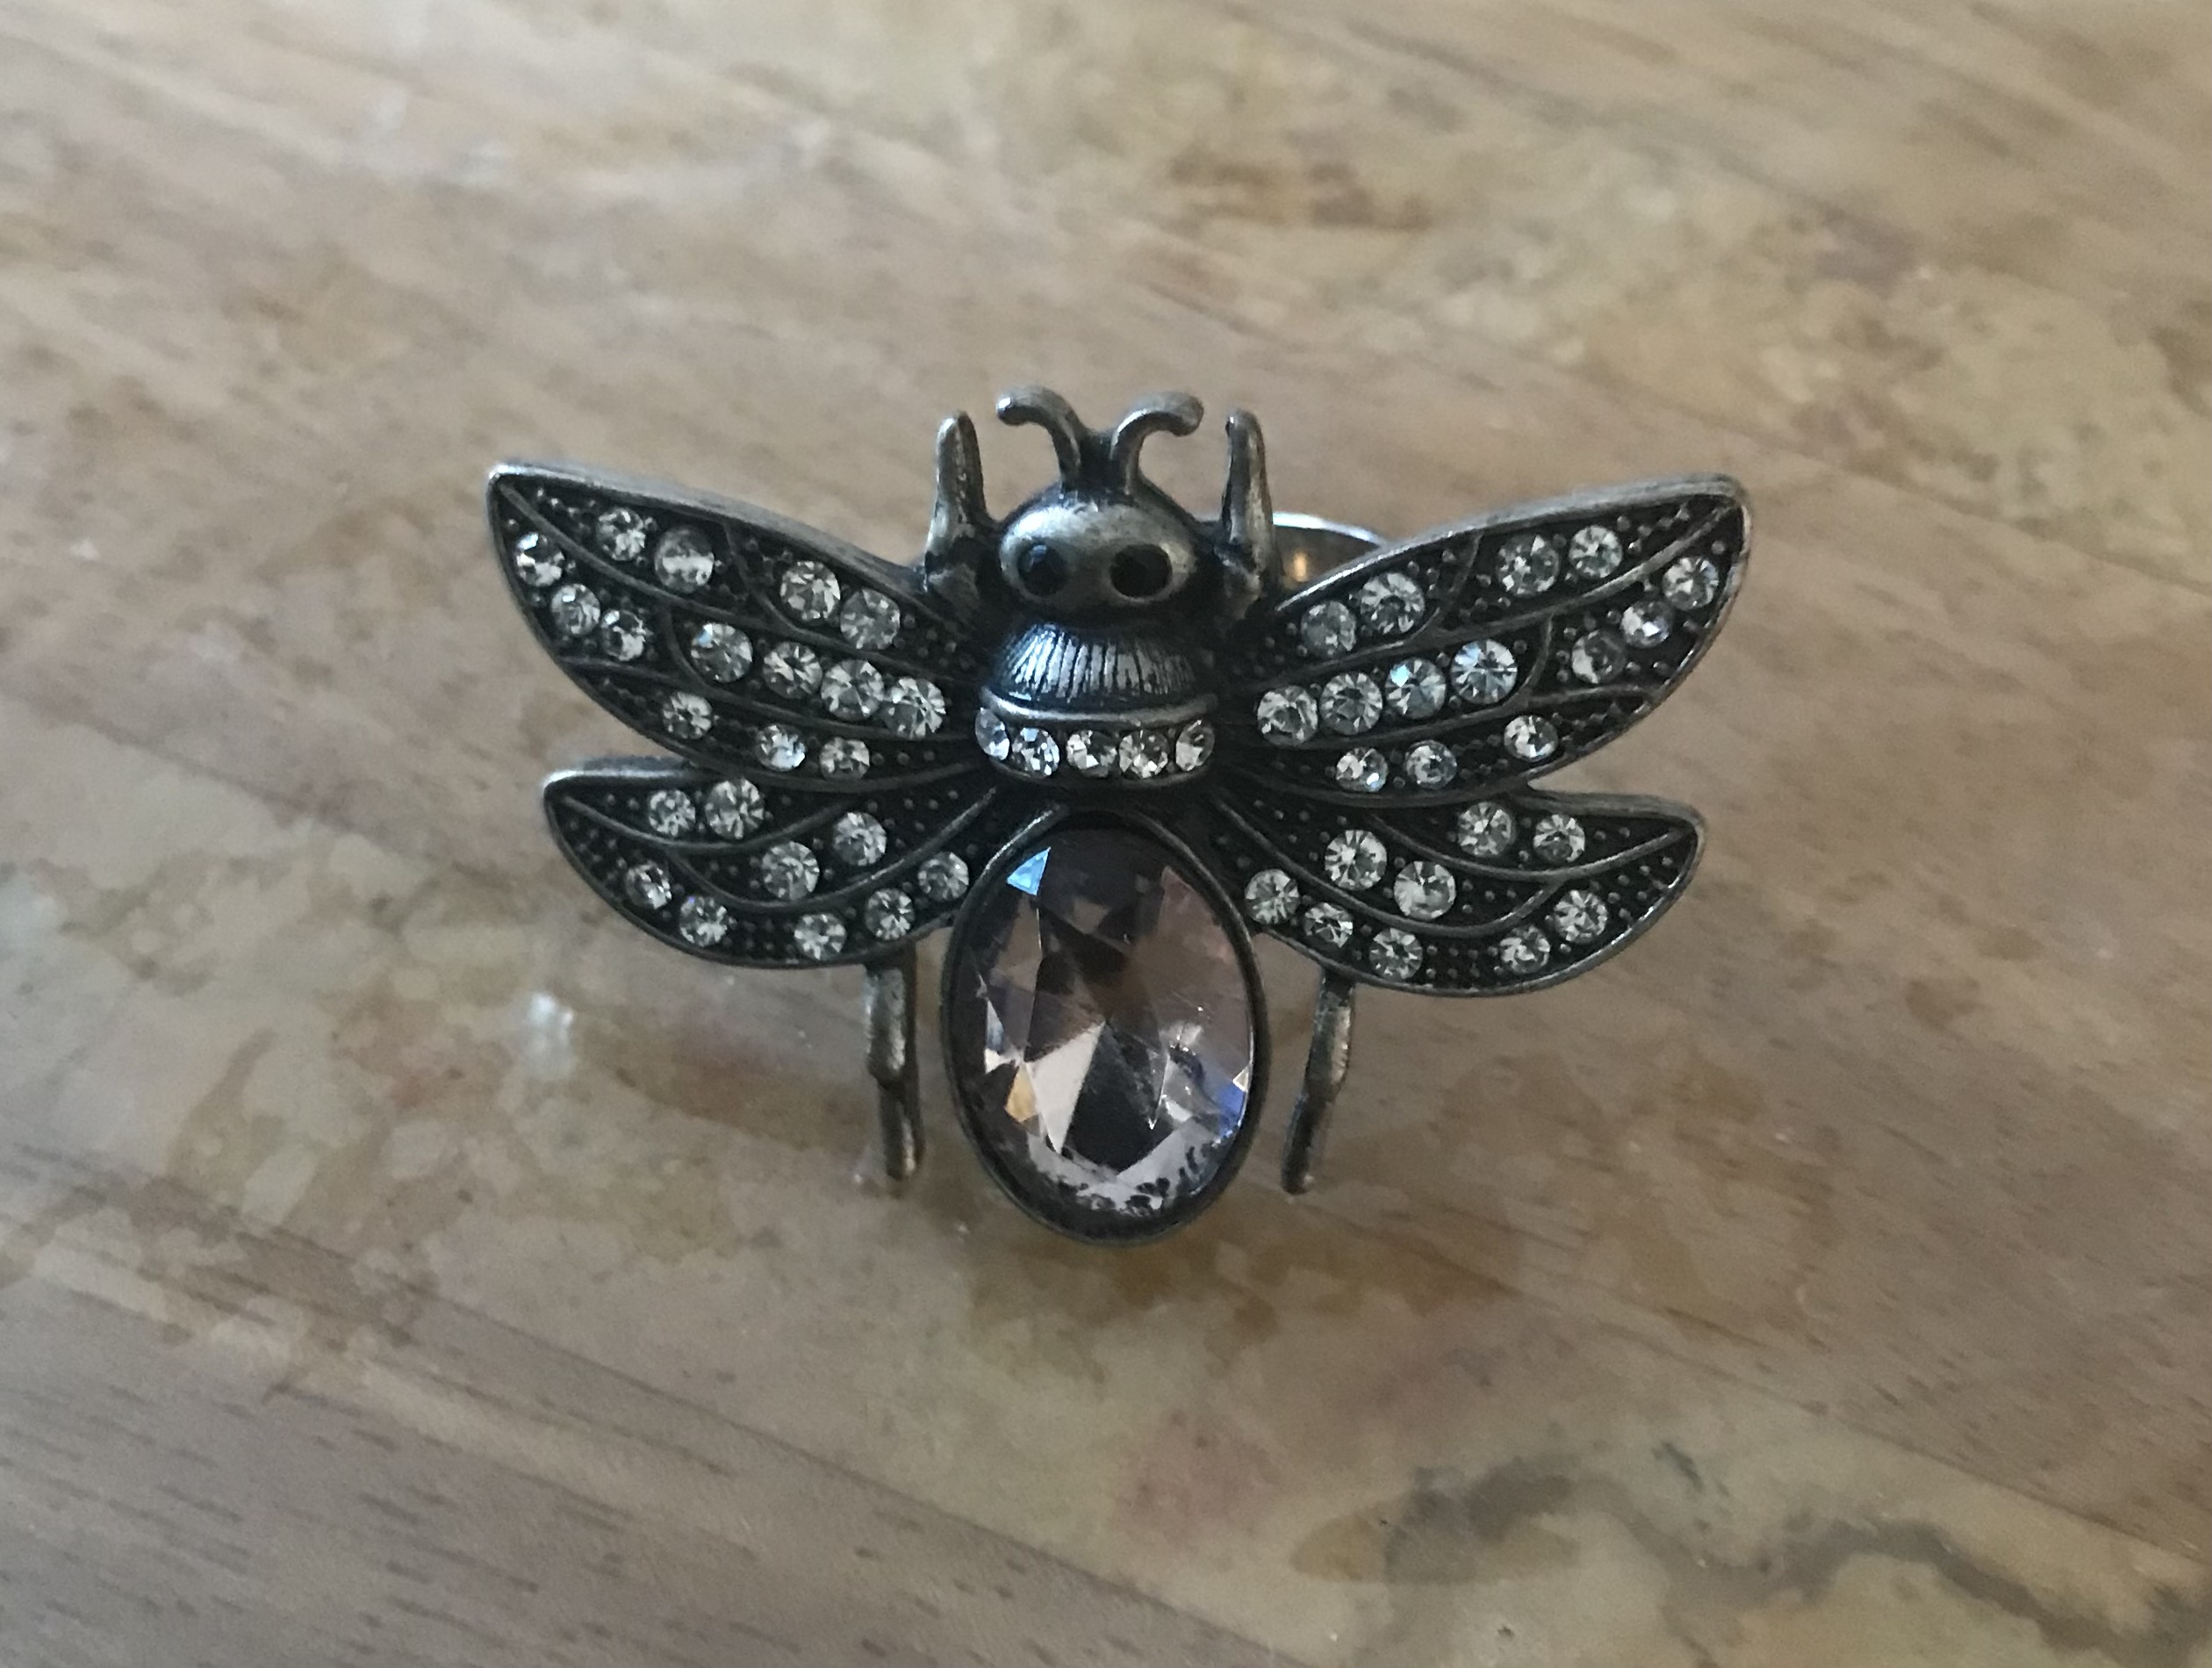 Vintage Ornate Bug Ring With Stone Embellishments - Image 4 of 4